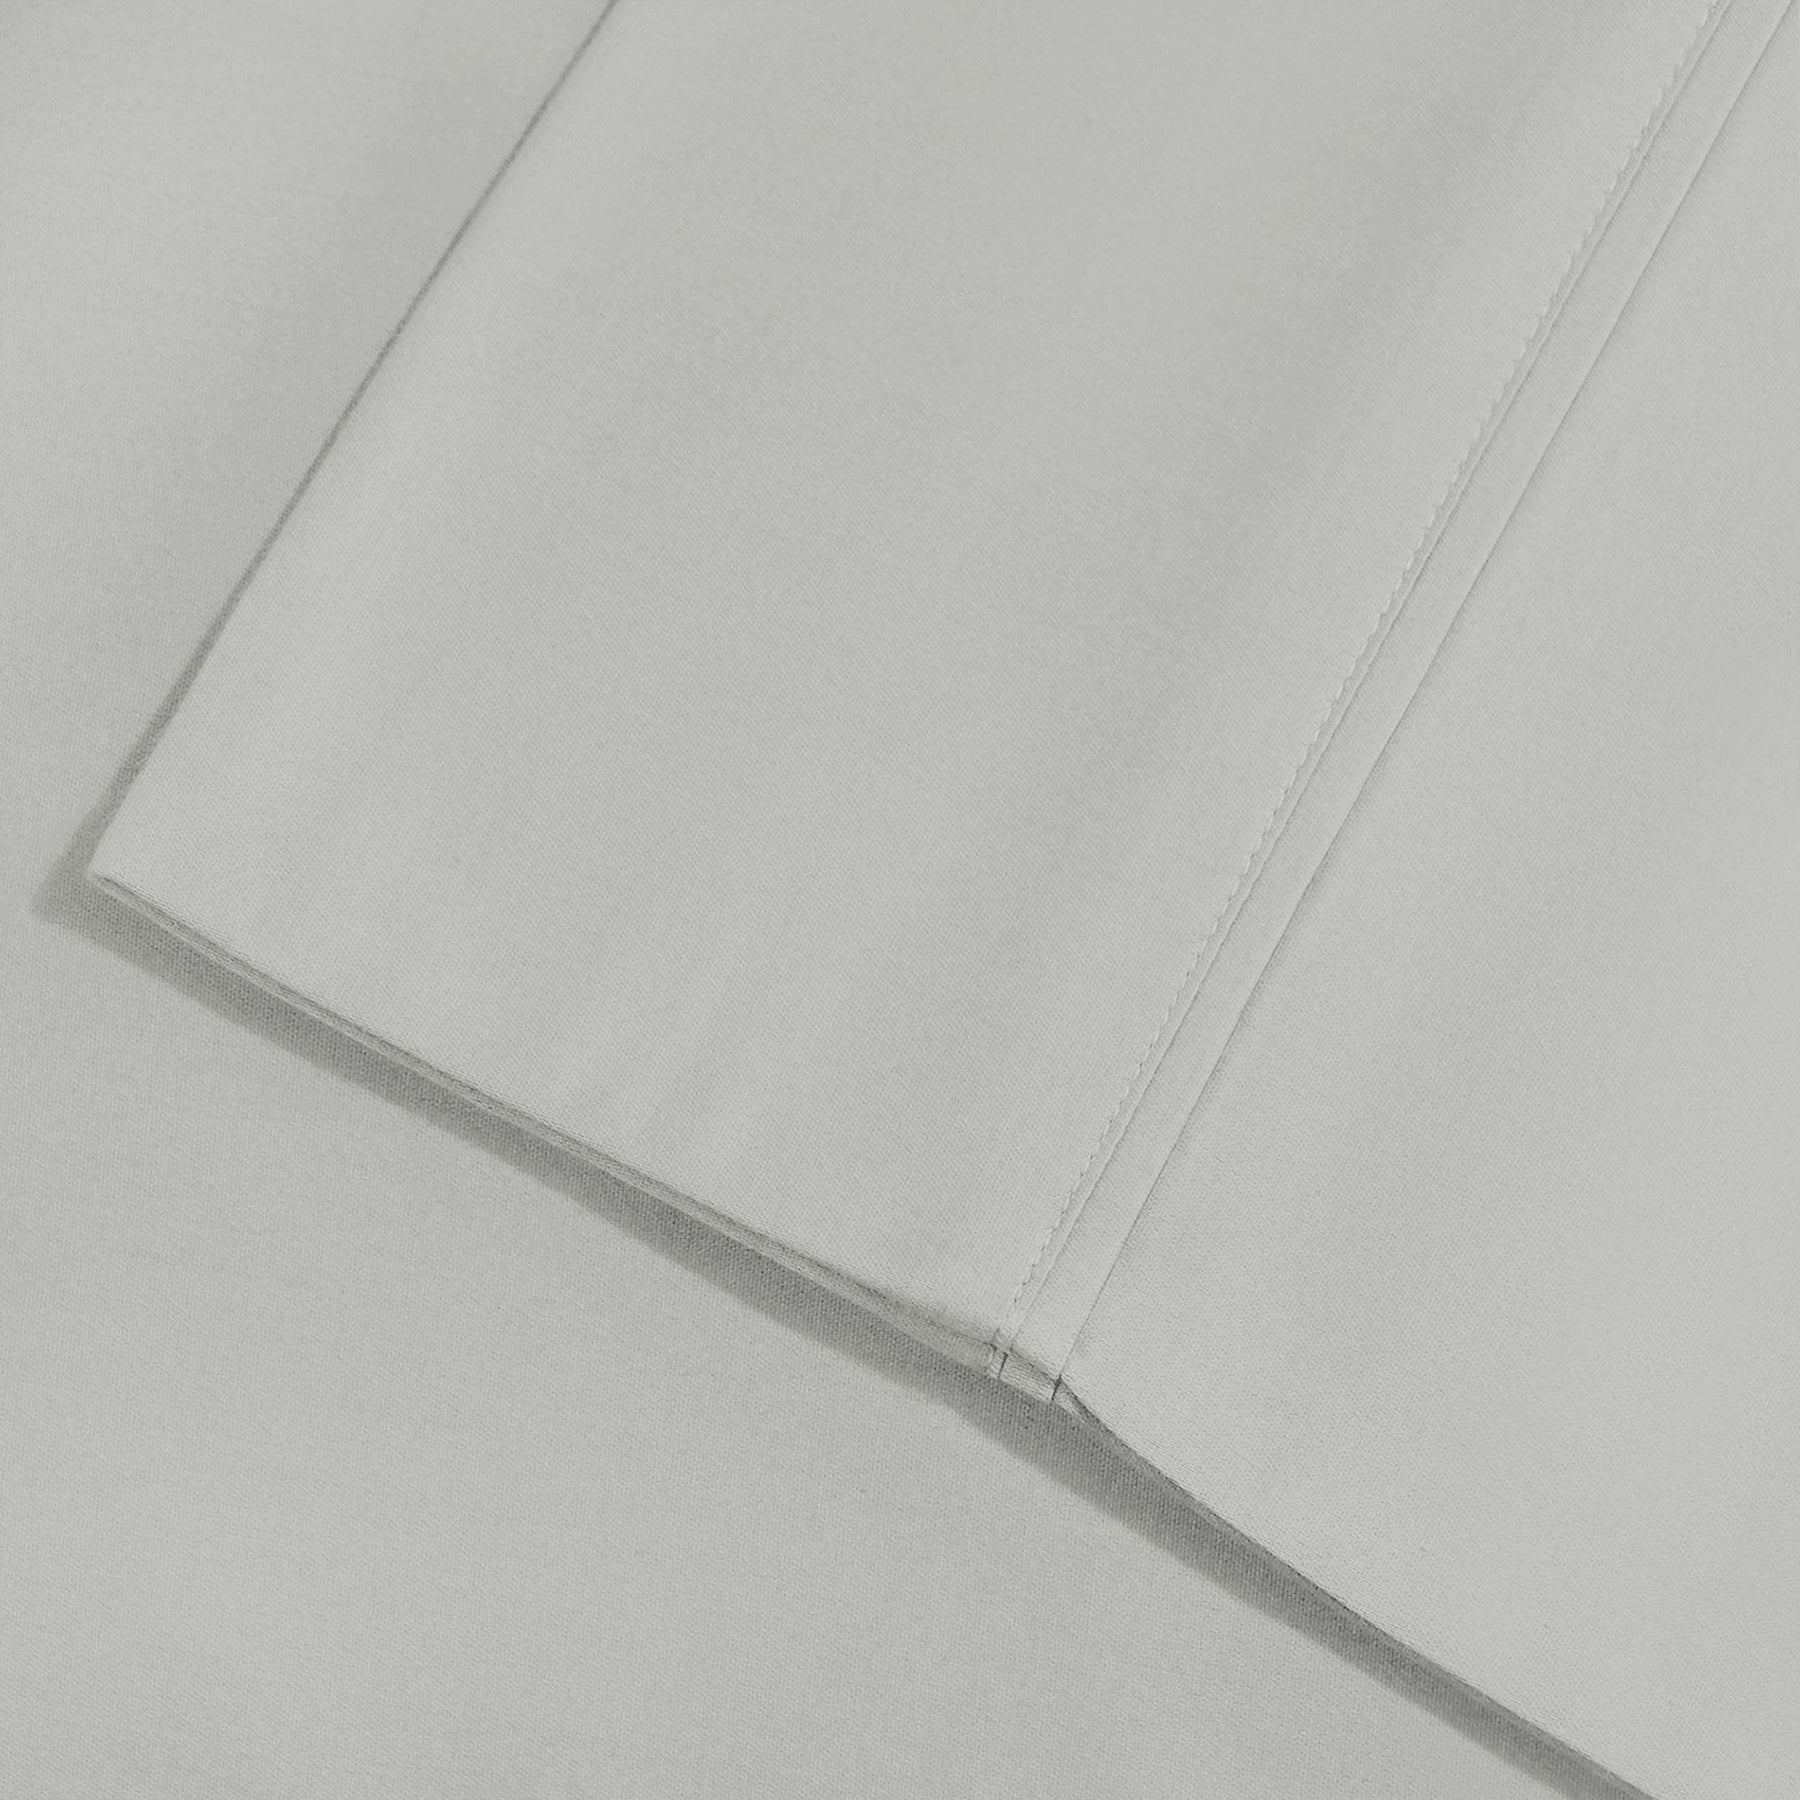  Superior Solid Count Cotton Blend Deep Pocket Sheet Set - Platinum